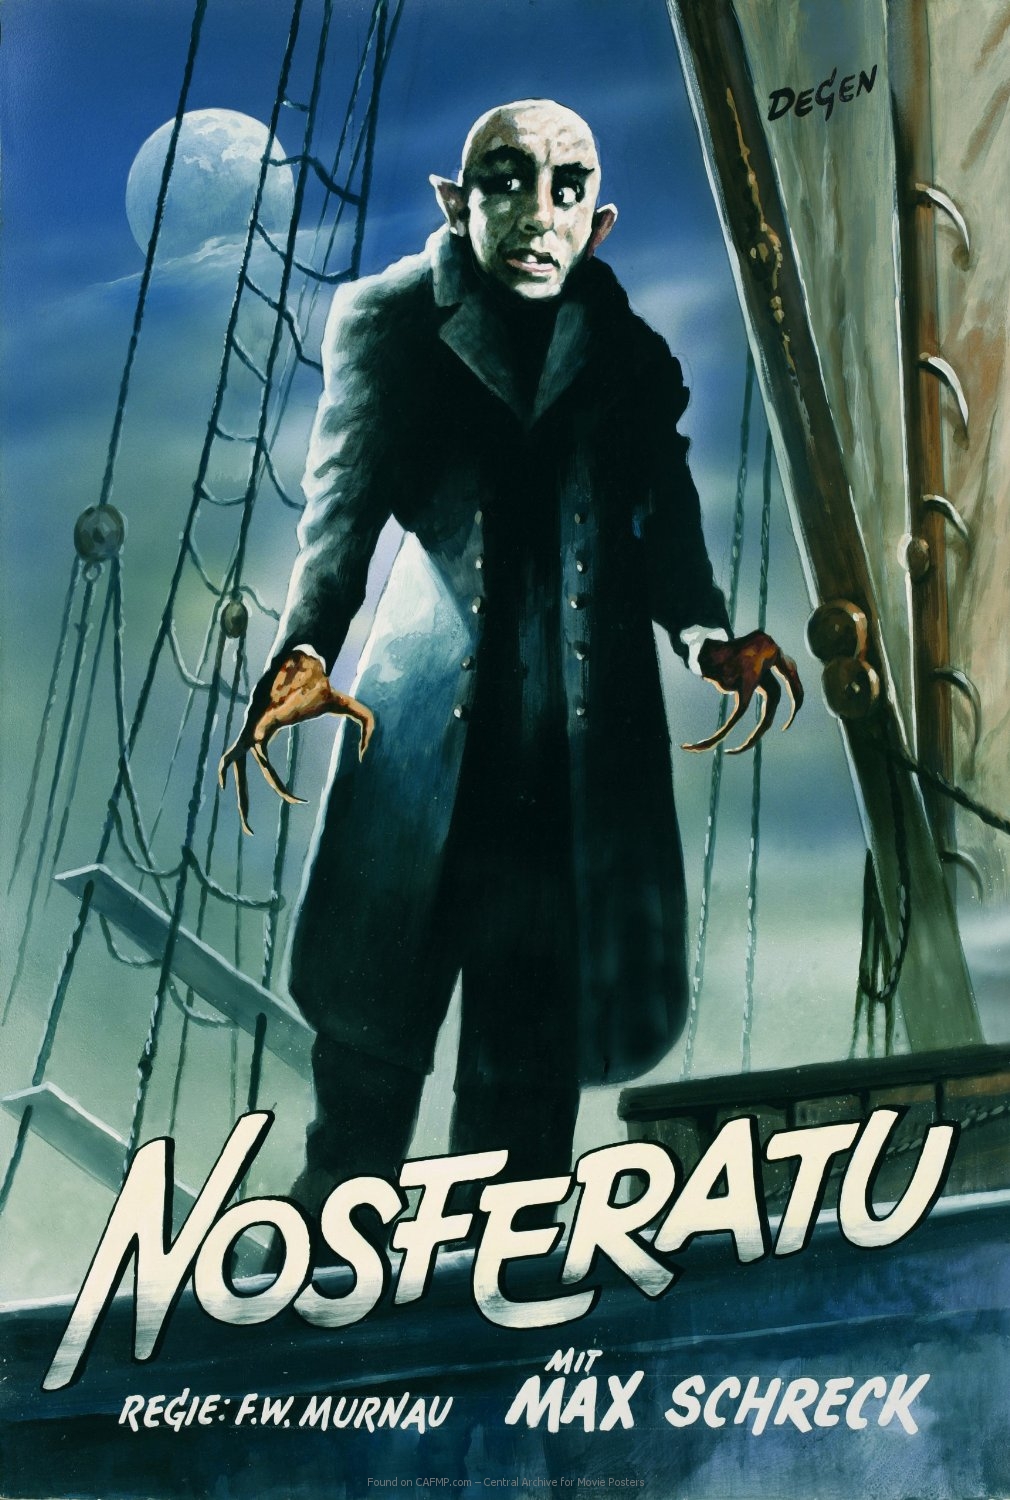 Movie Poster "Nosferatu" on CAFMP.